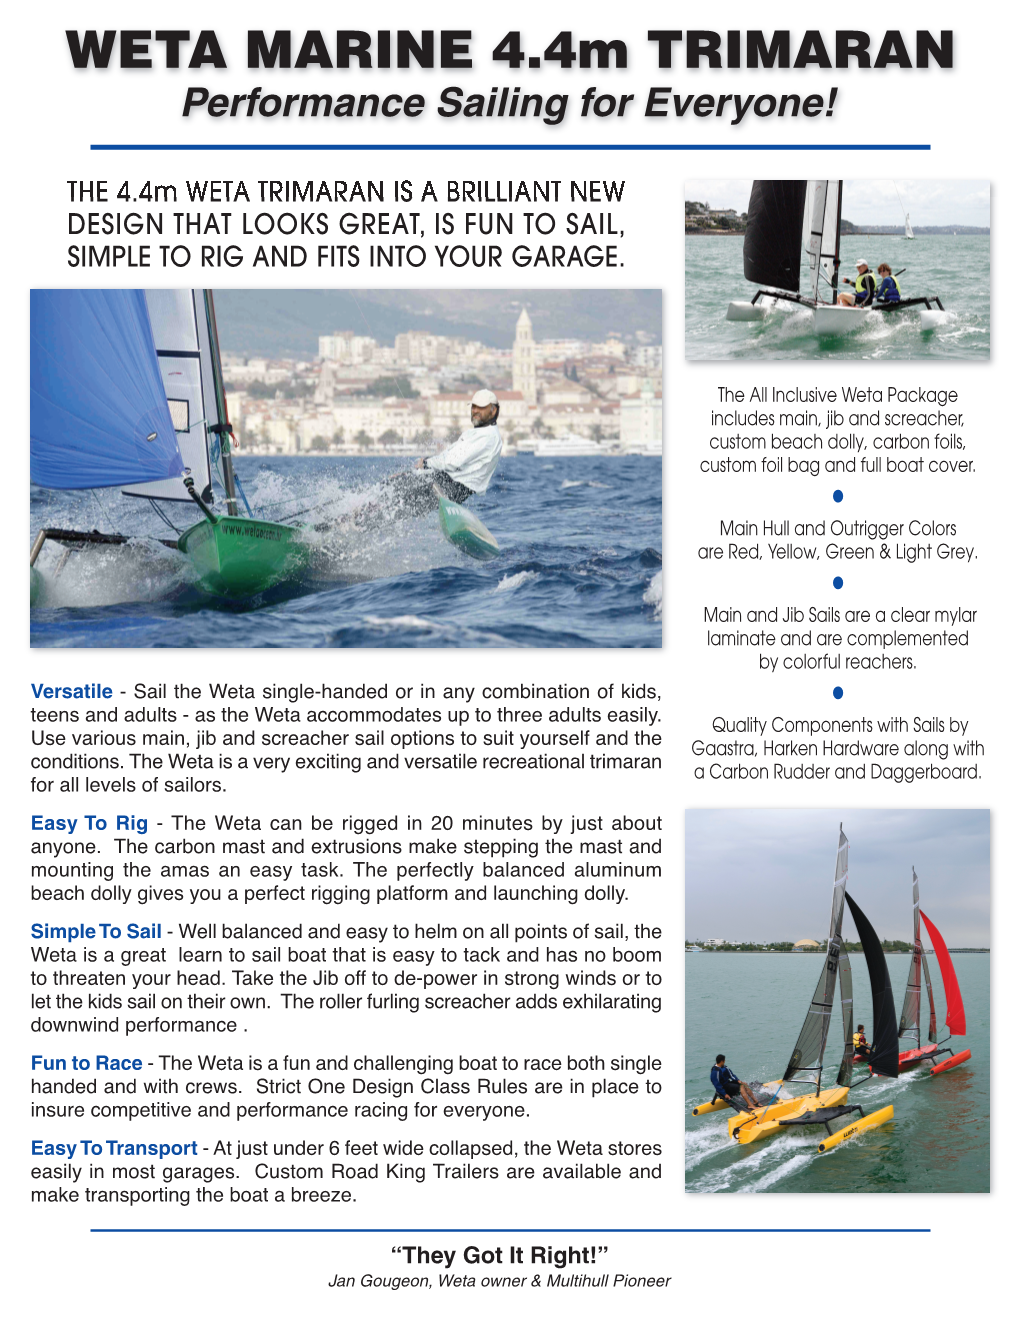 WETA MARINE 4.4M TRIMARAN Performance Sailing for Everyone!